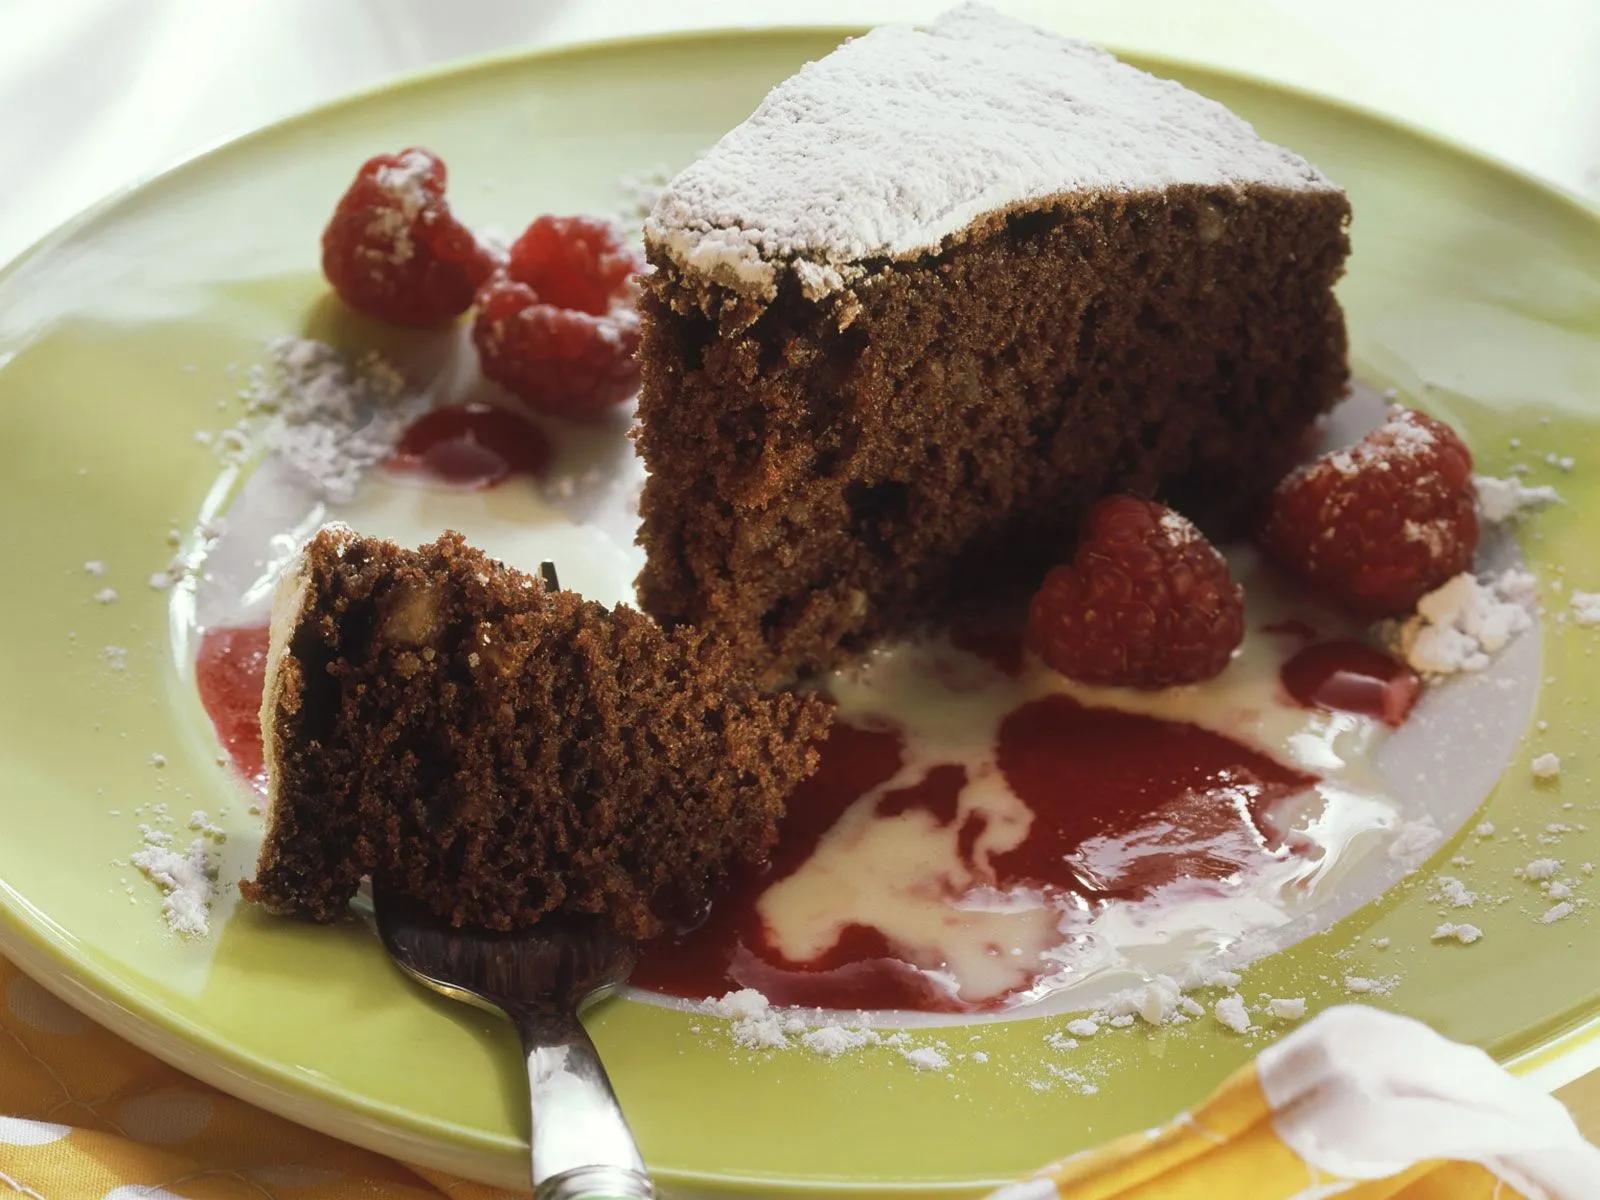 Schokoladen-Nuss-Kuchen mit Himbeer- und Vanillesoße Rezept | EAT SMARTER